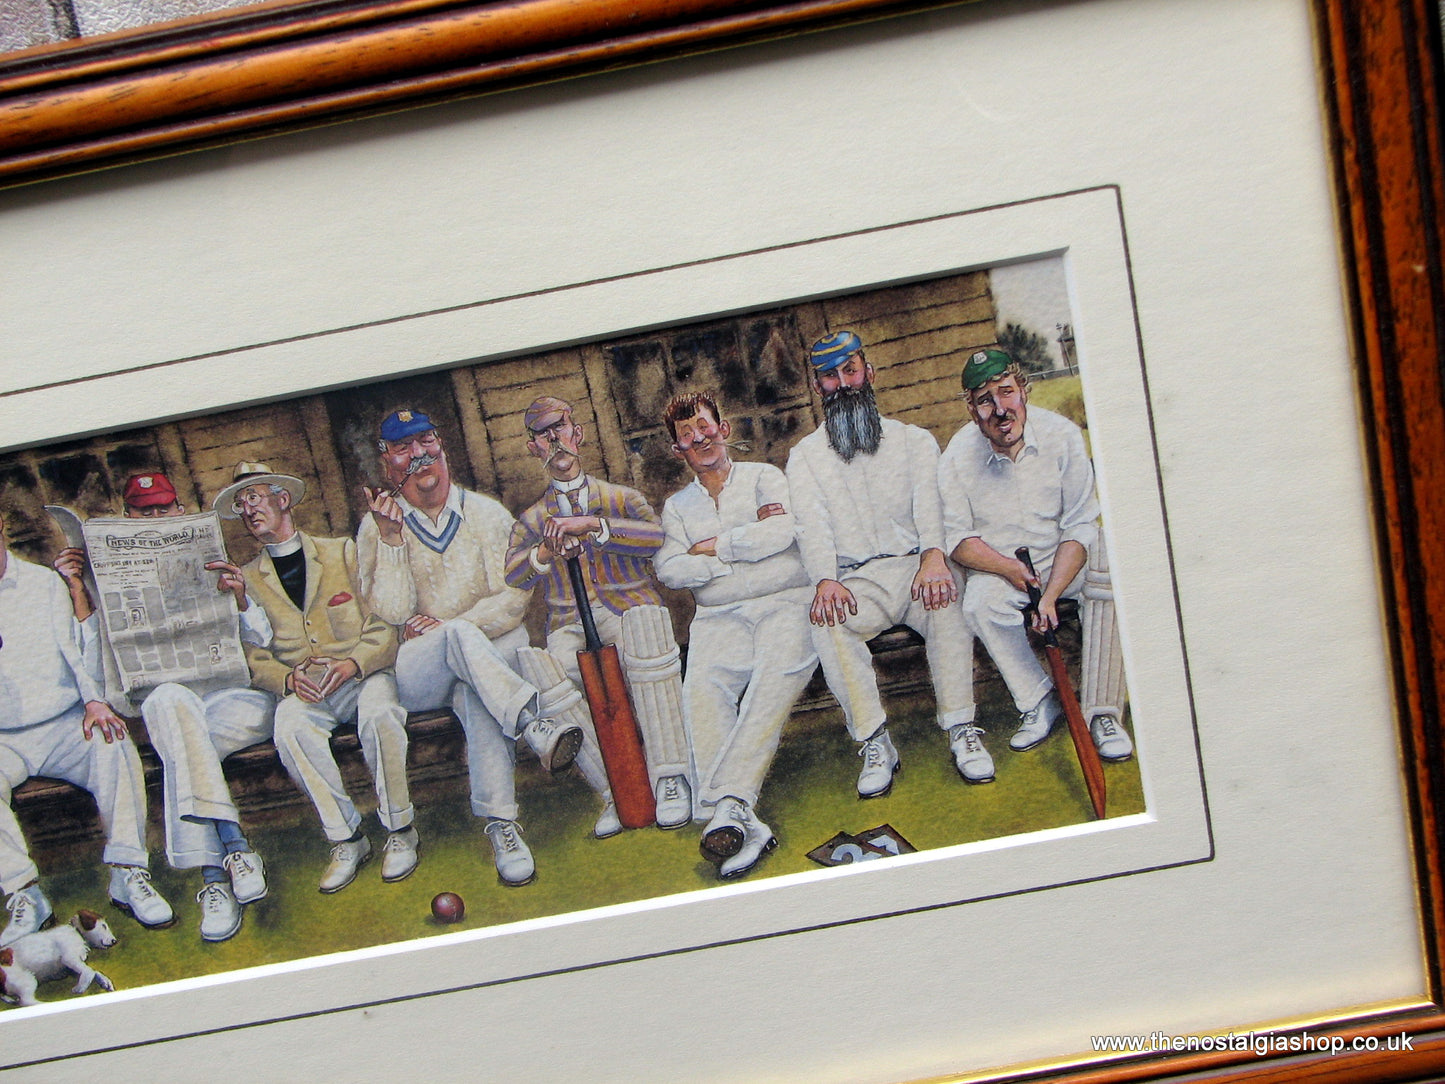 Cricket. Framed Print.